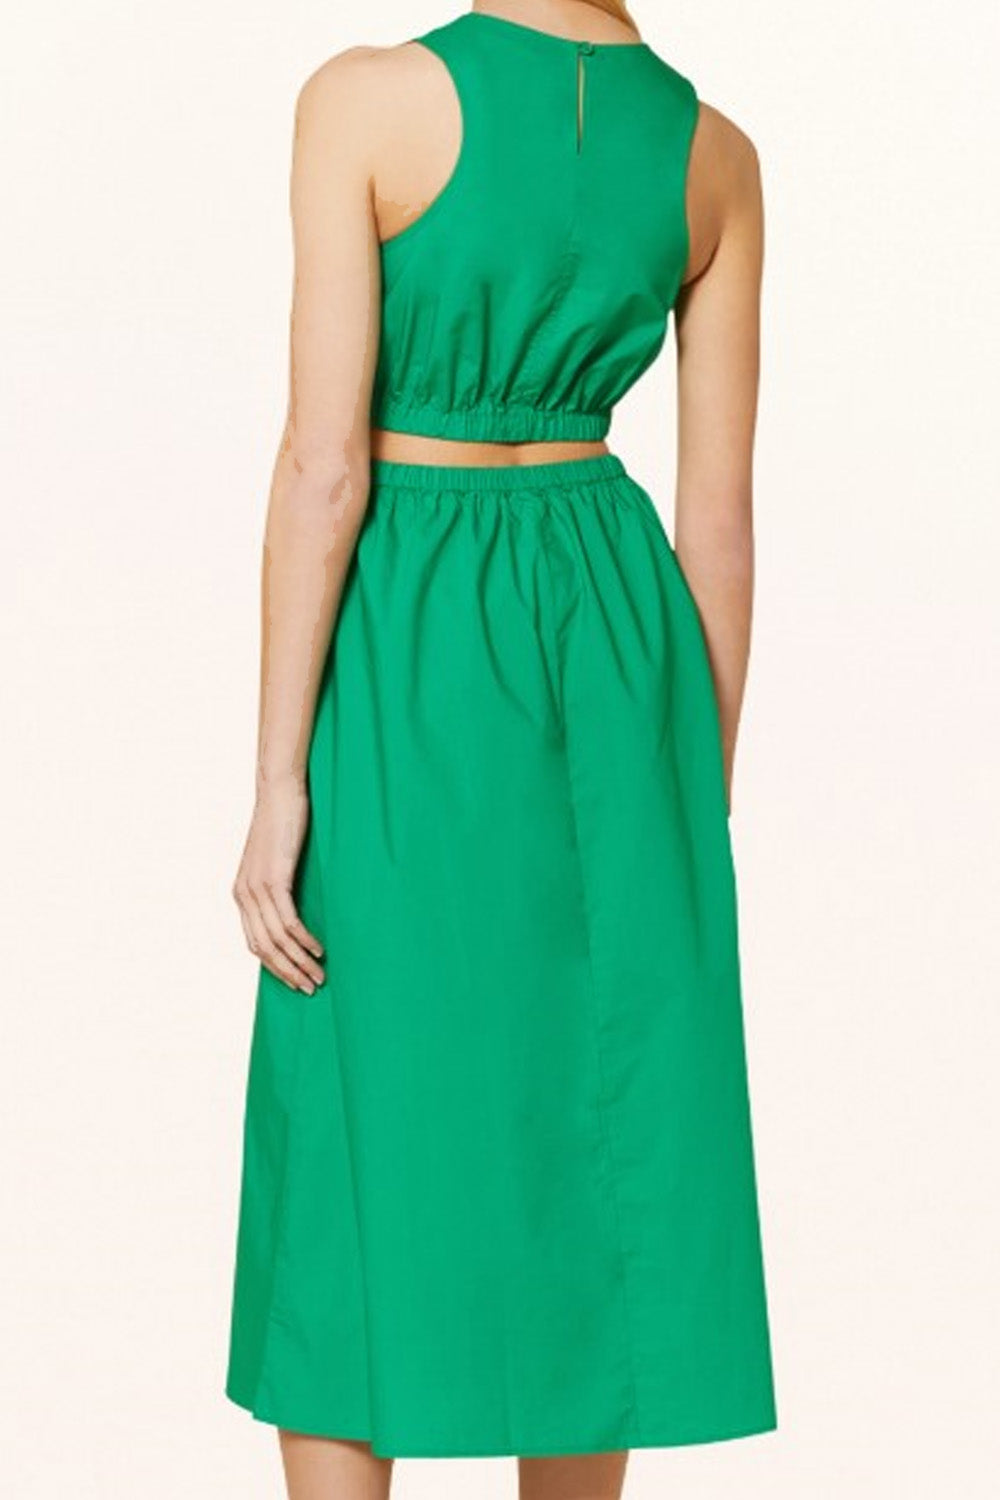 Preserve Green Dress